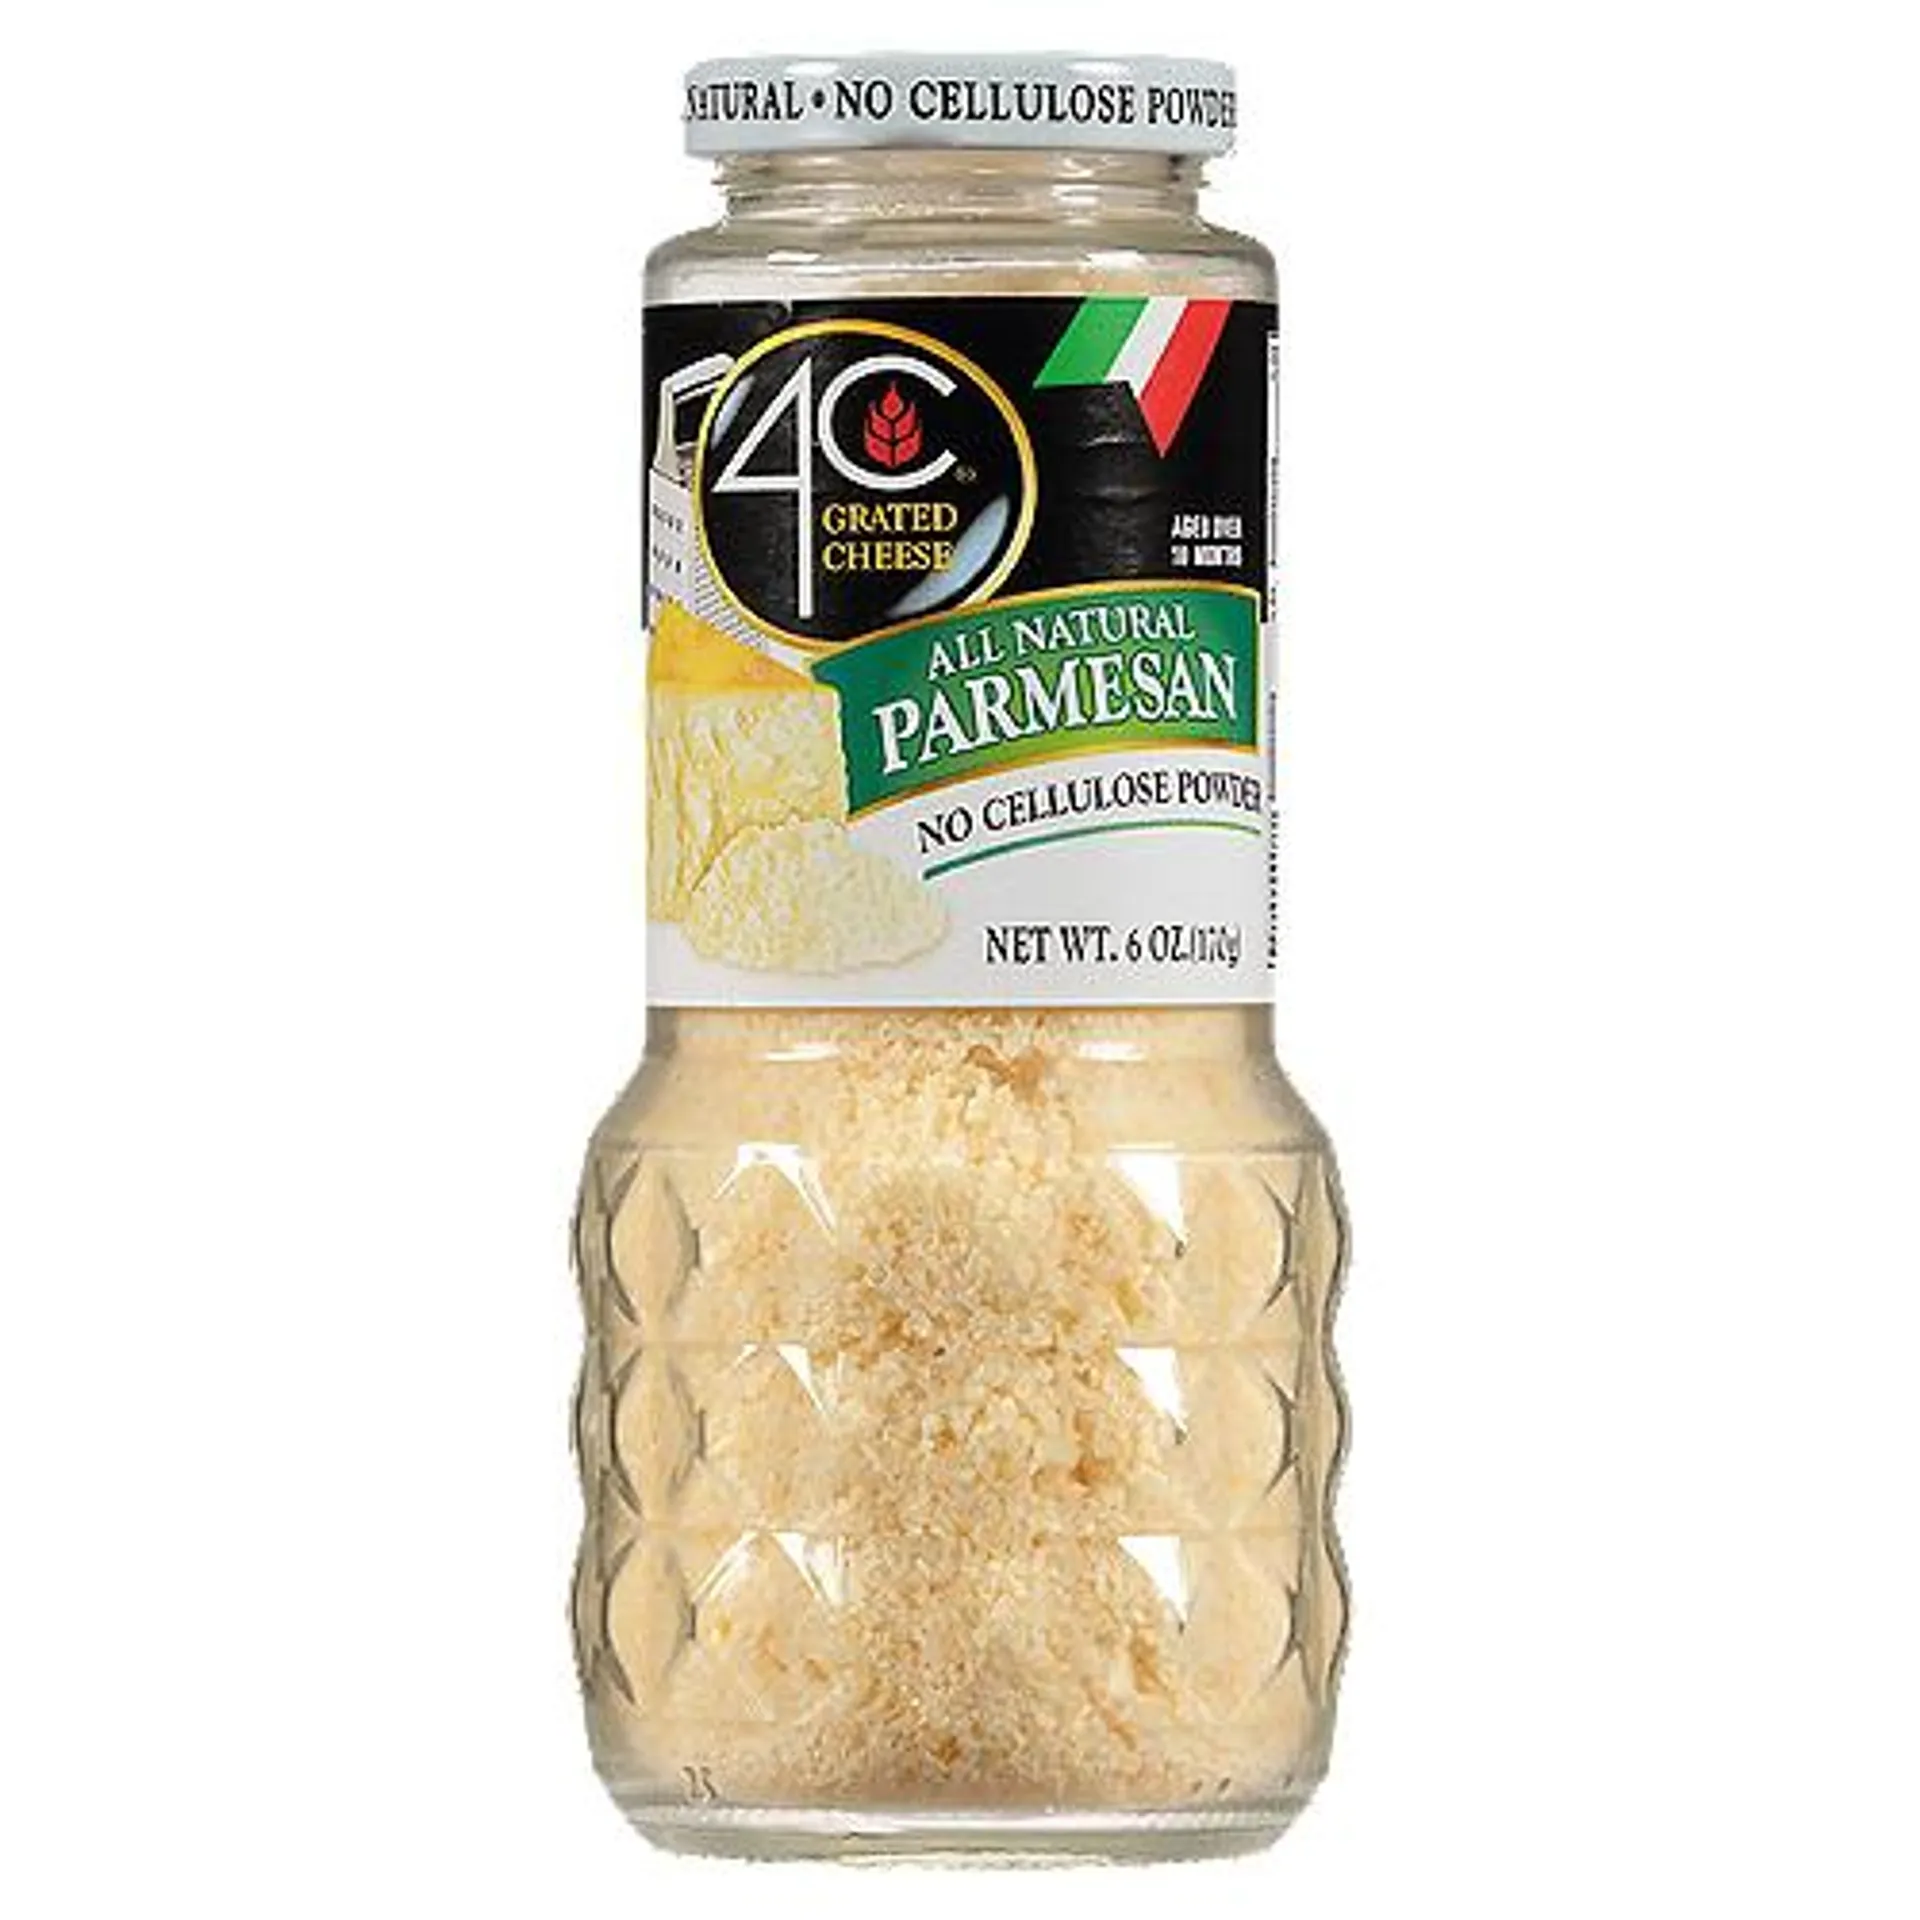 4C All Natural Parmesan Grated Cheese, 6 oz